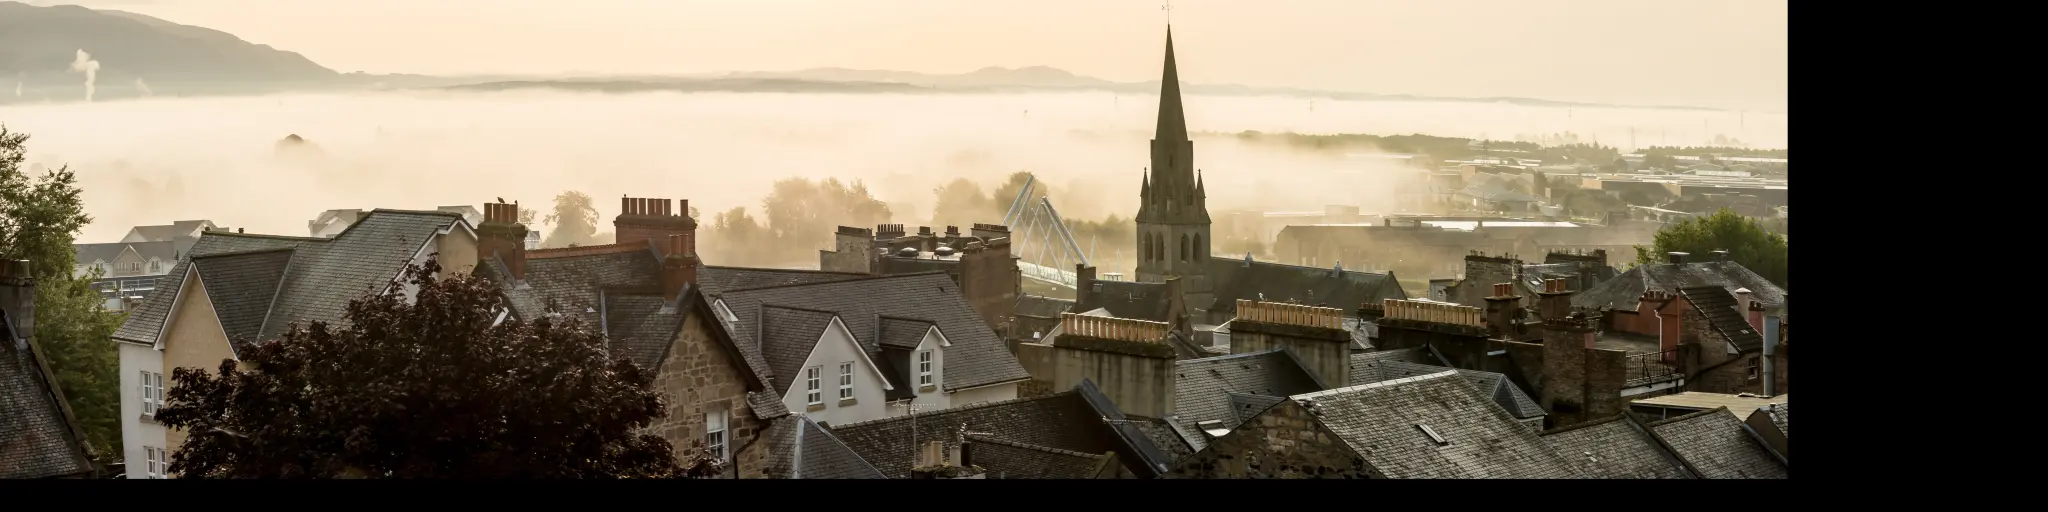 Day trip from Edinburgh to Stirling, Scotland - morning haze